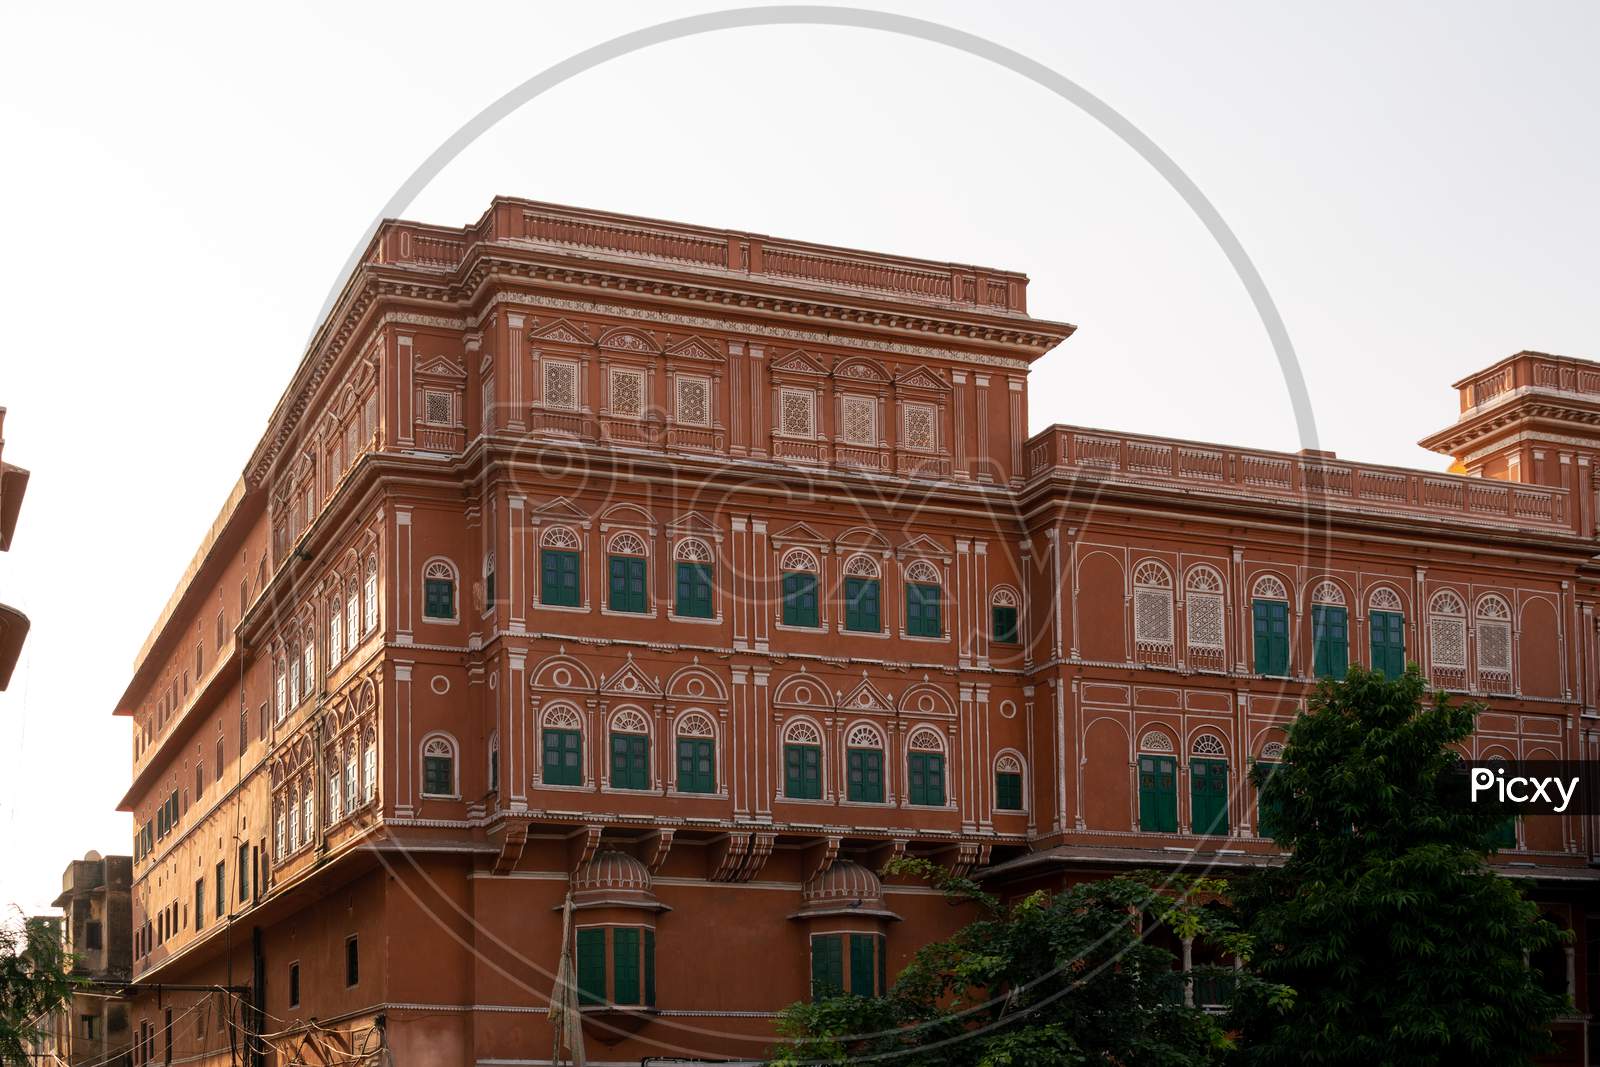 Building of Museum of Legacies or Maharajah school of arts and crafts, jaipur